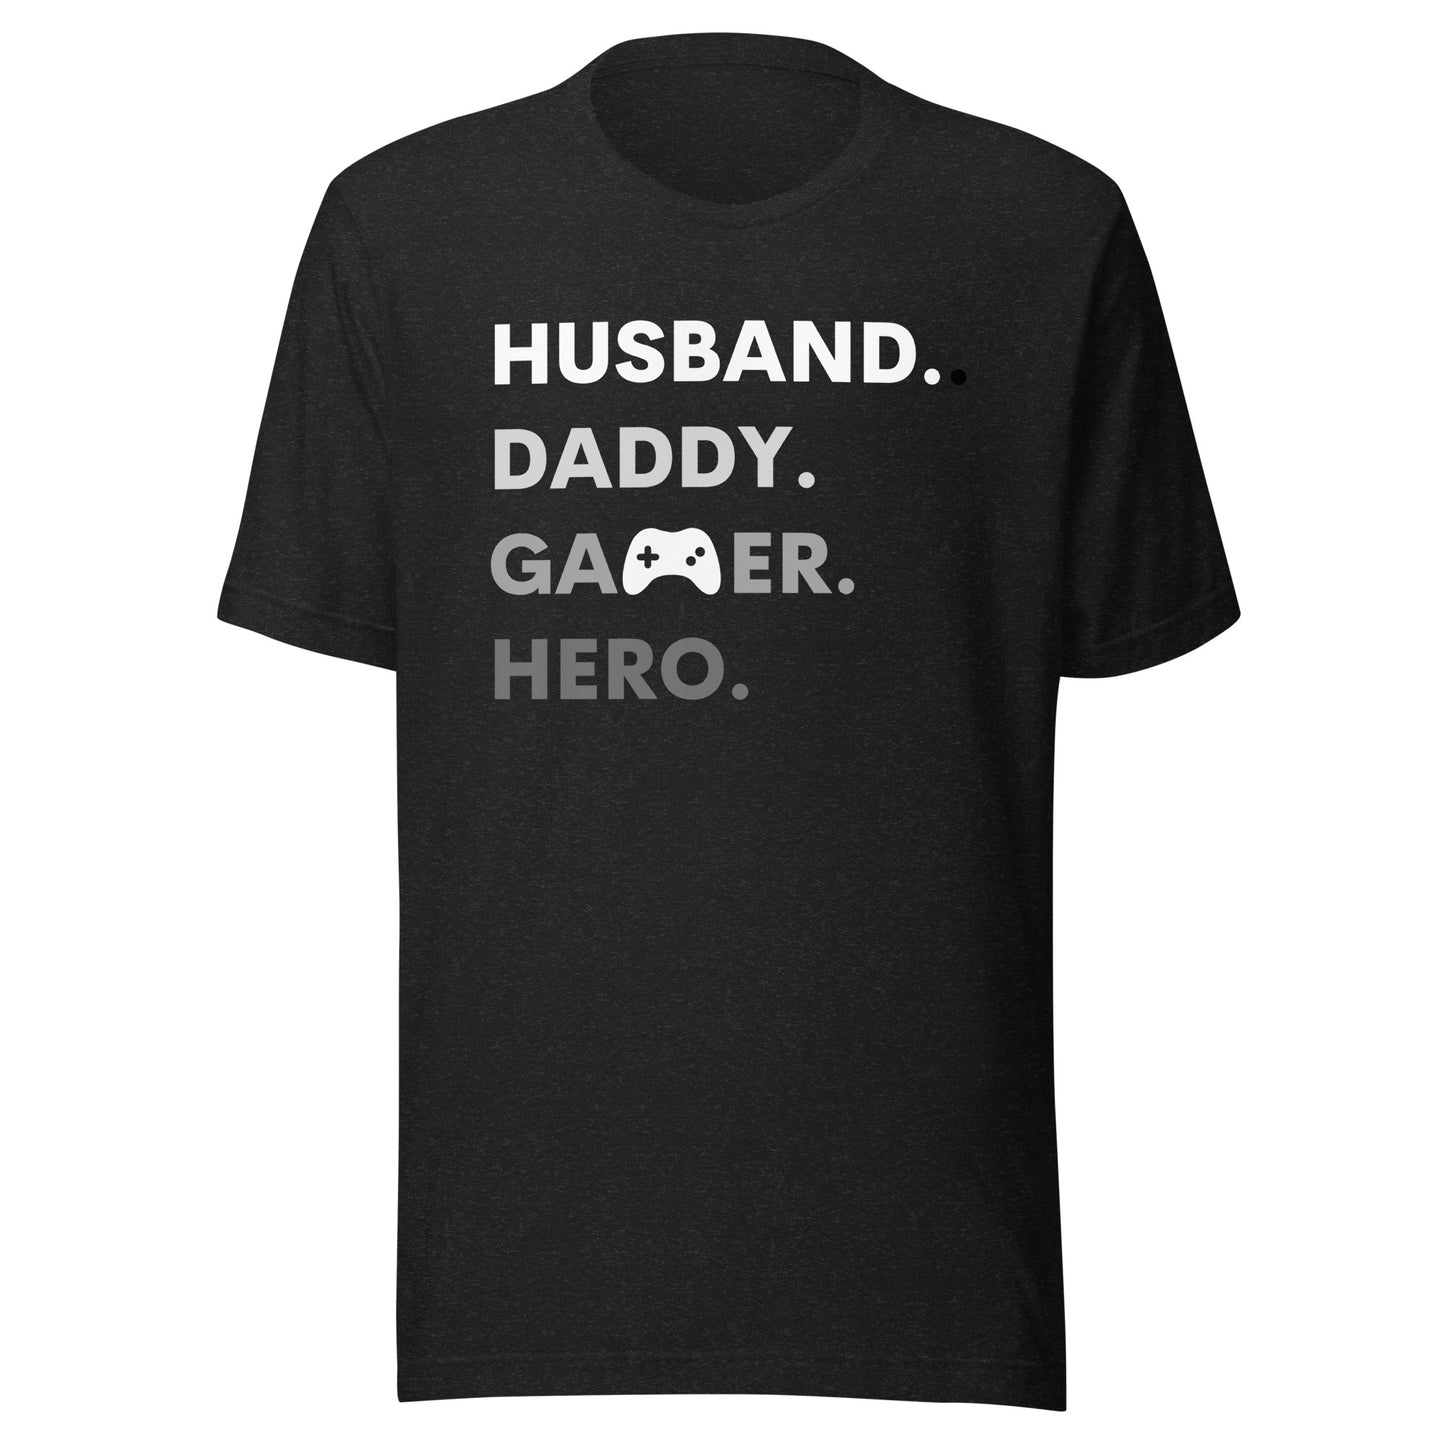 Husband. Daddy. Gamer. Hero